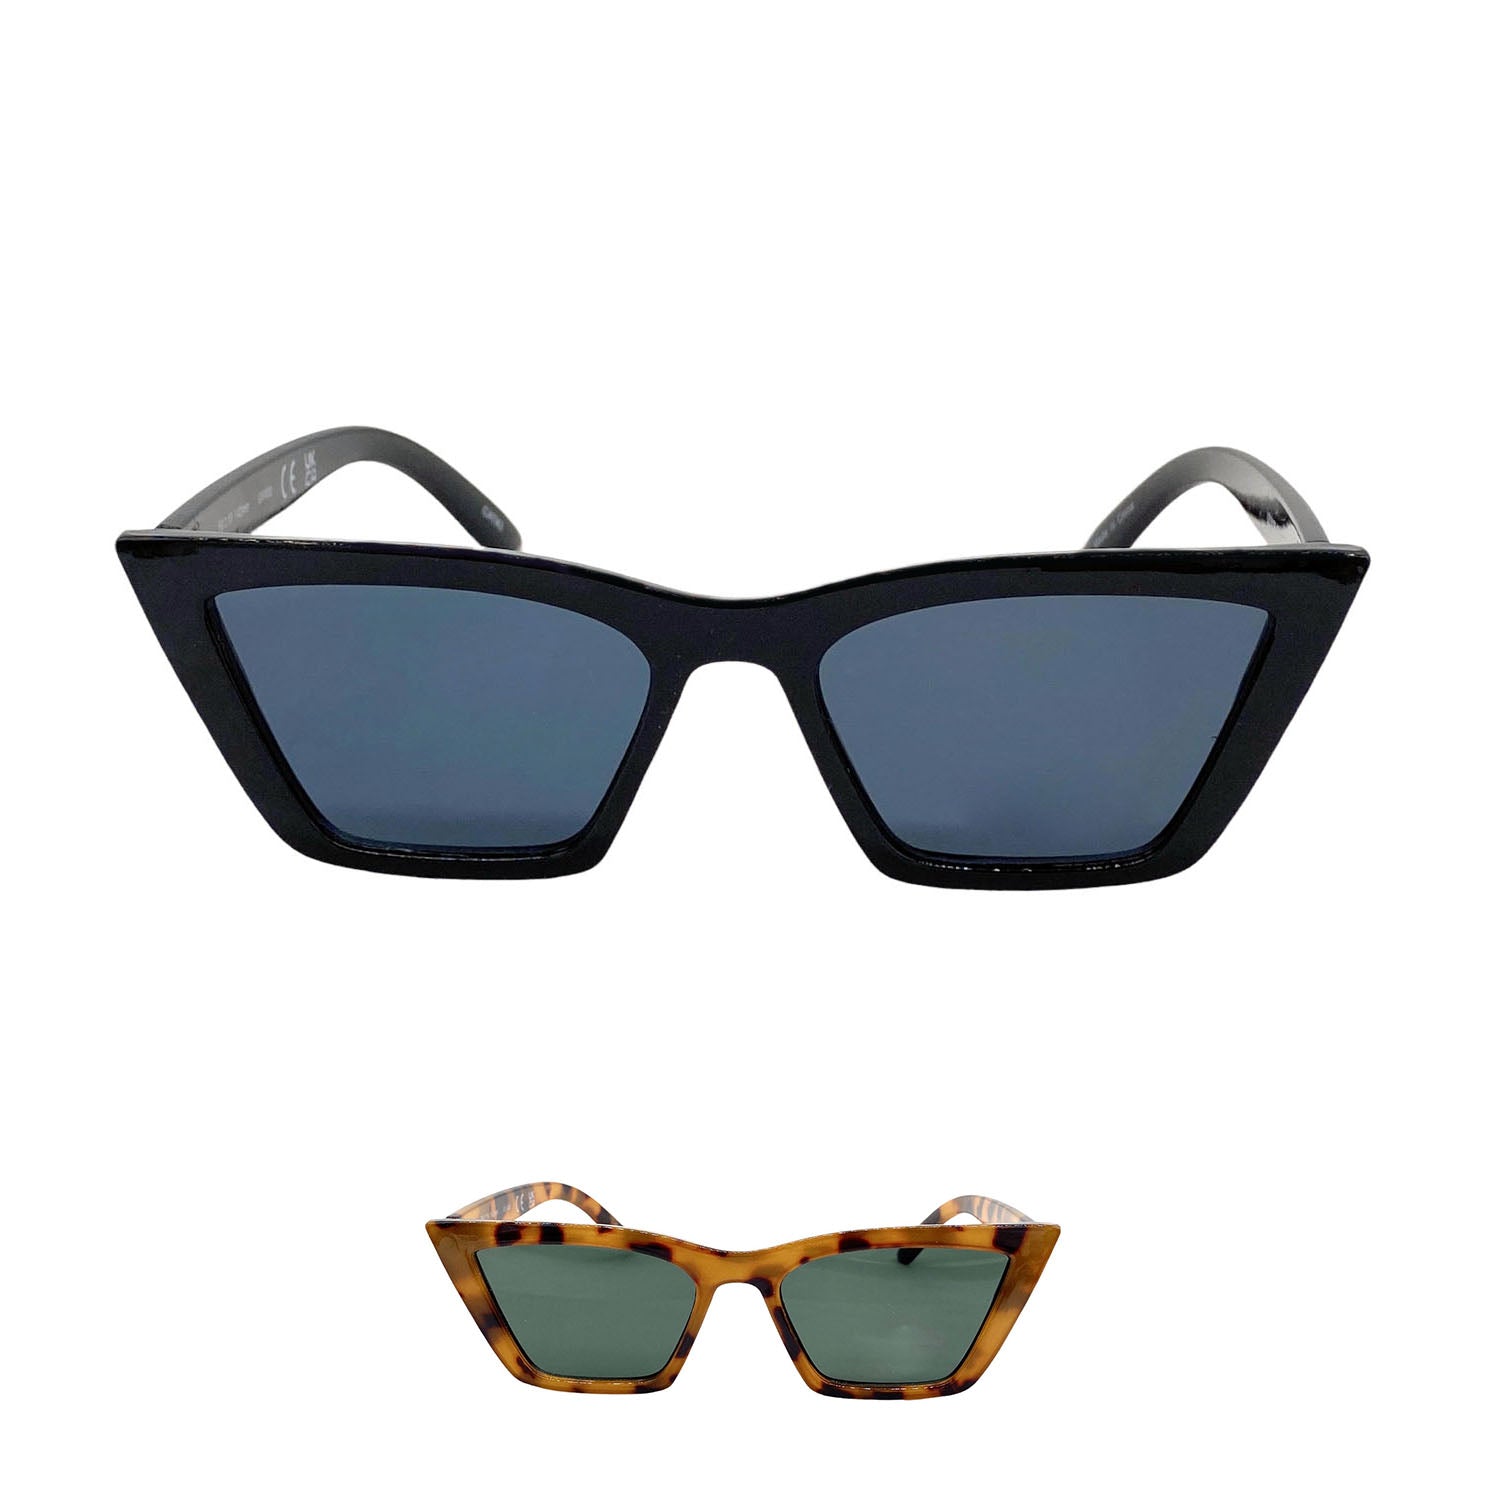 Square Retro Cat Eye Sunglasses - Black